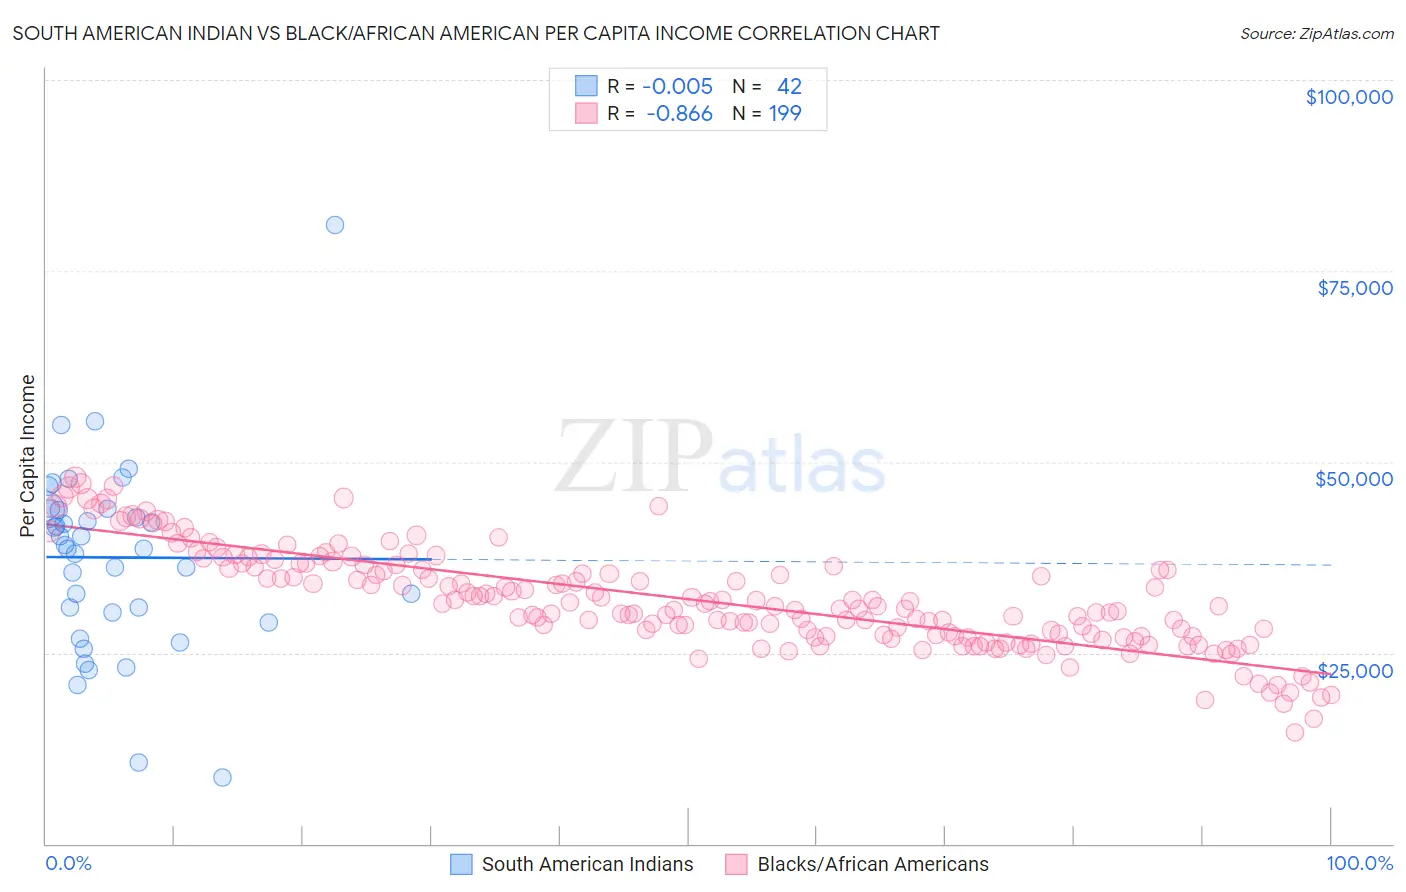 South American Indian vs Black/African American Per Capita Income